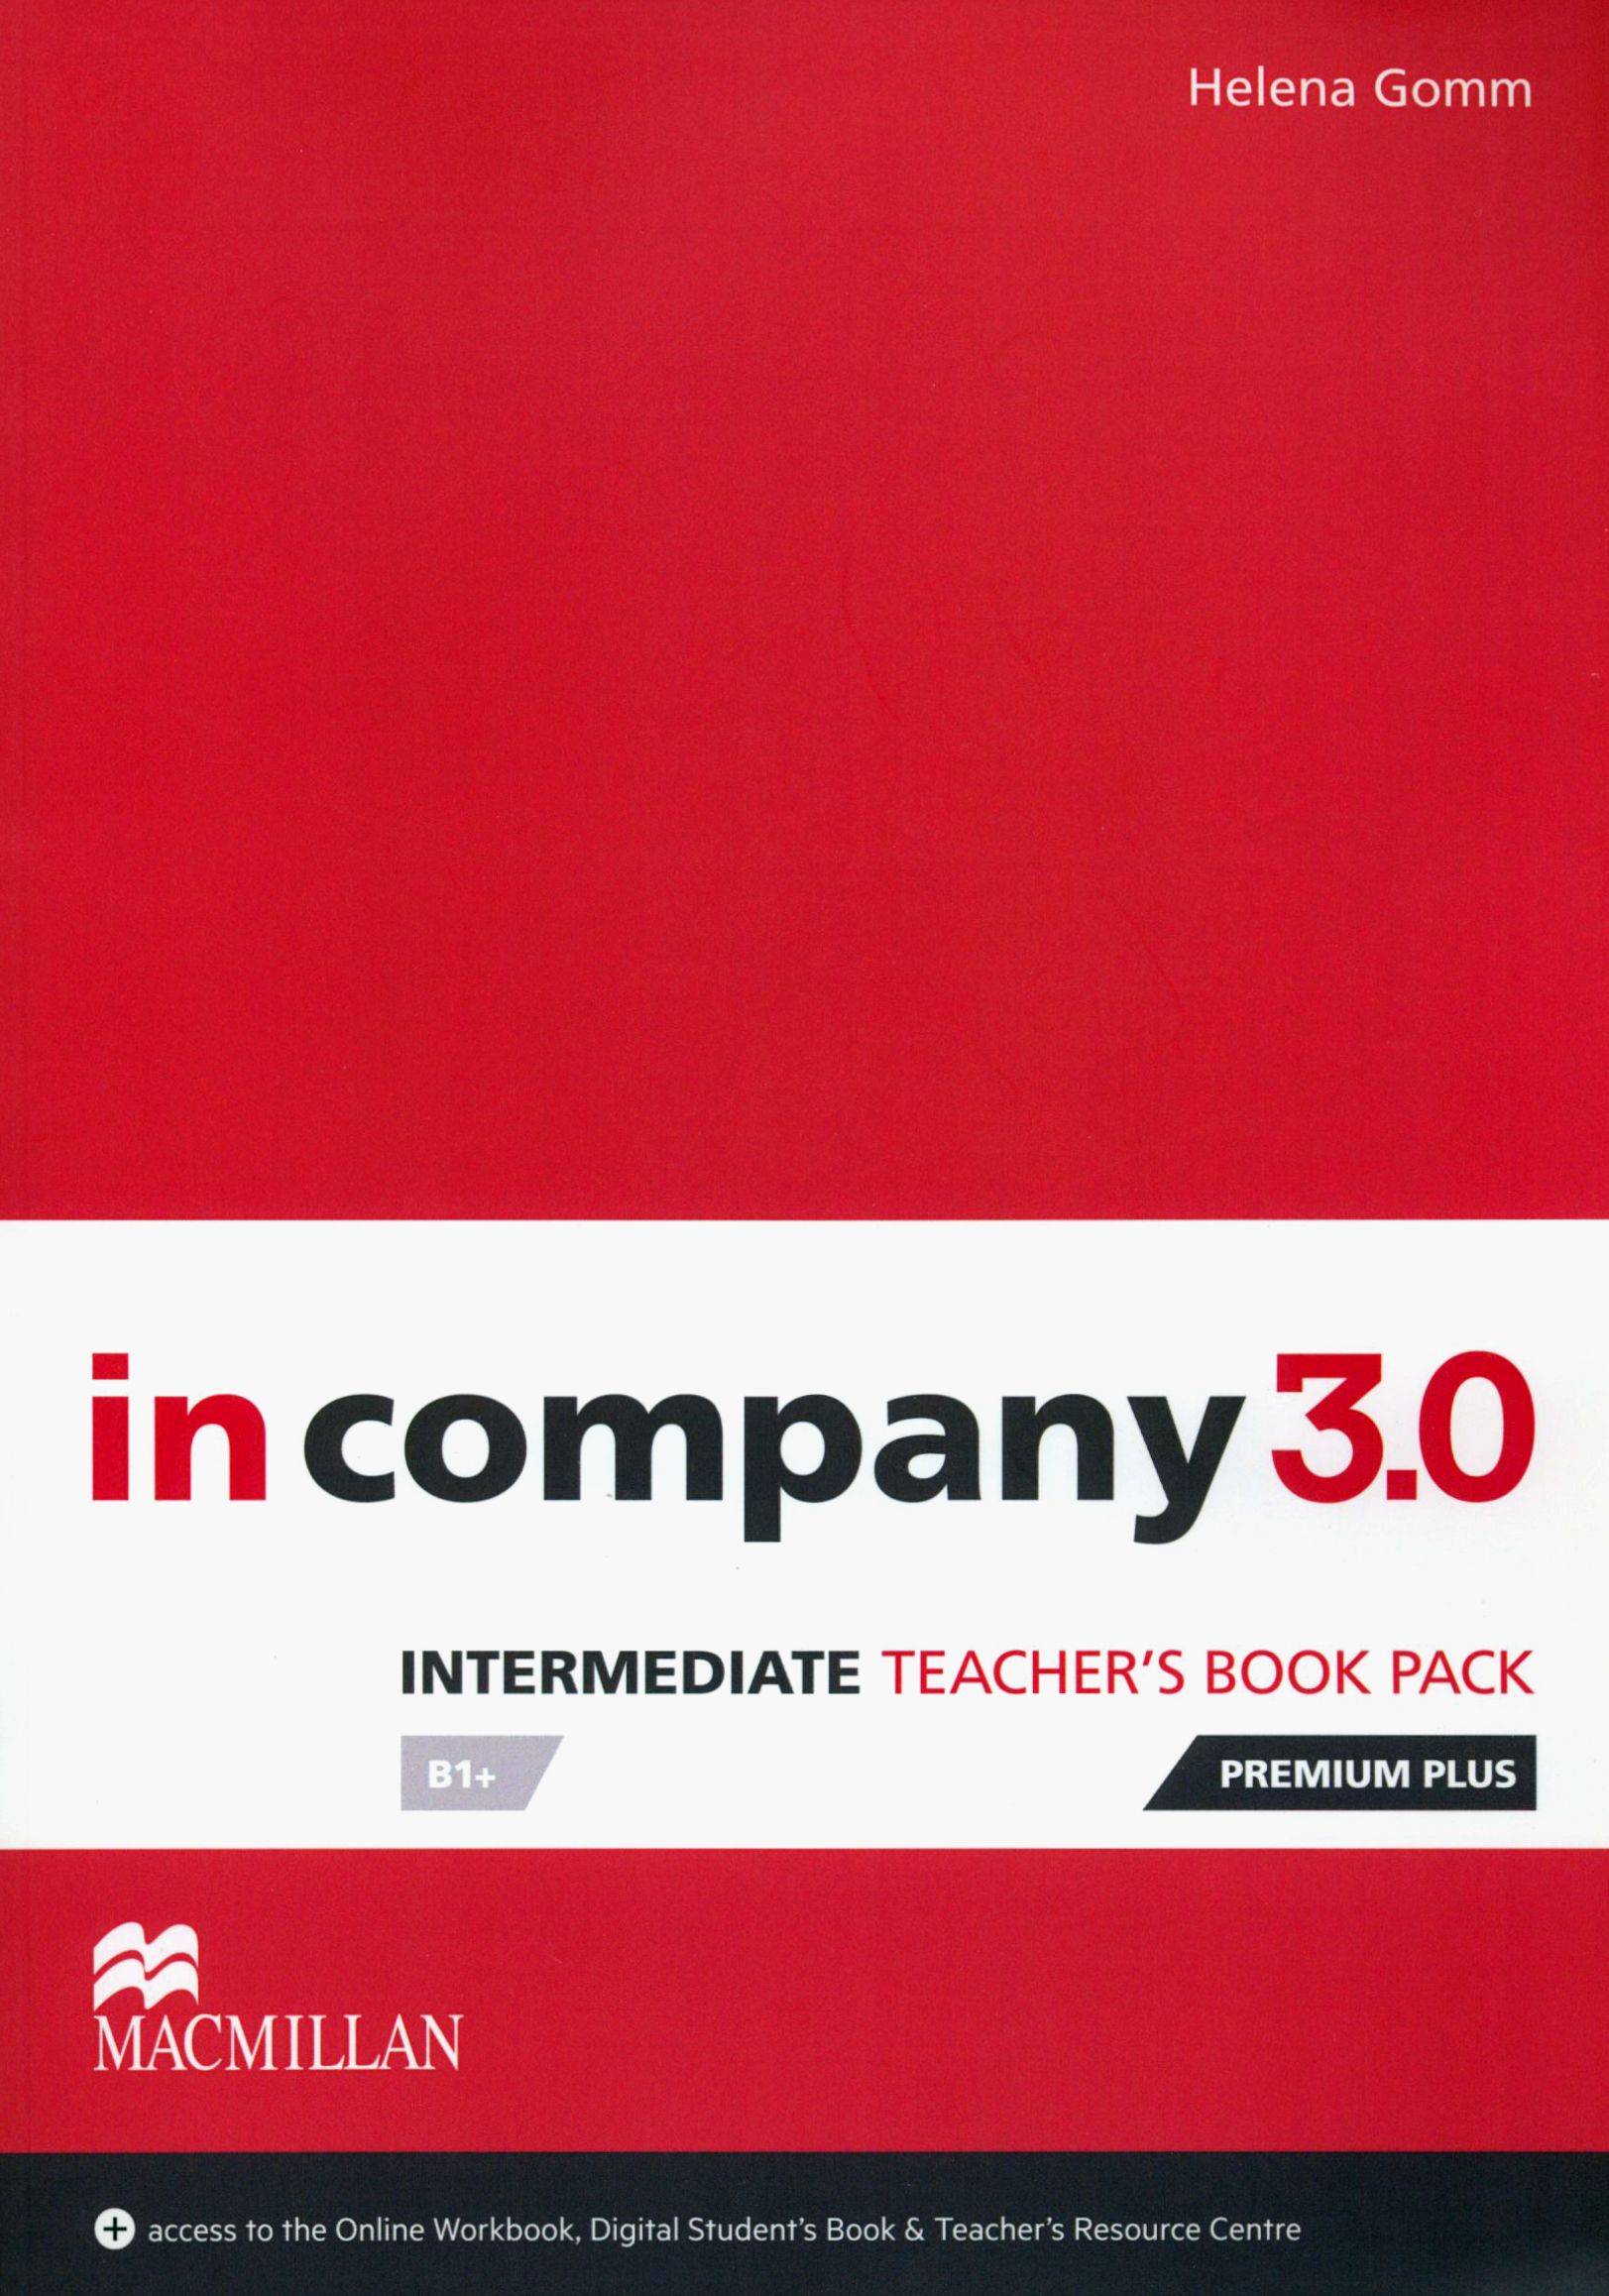 Macmillan s book. In Company 3.0. In Company book. In Company Intermediate. In Company 3.0 Intermediate.